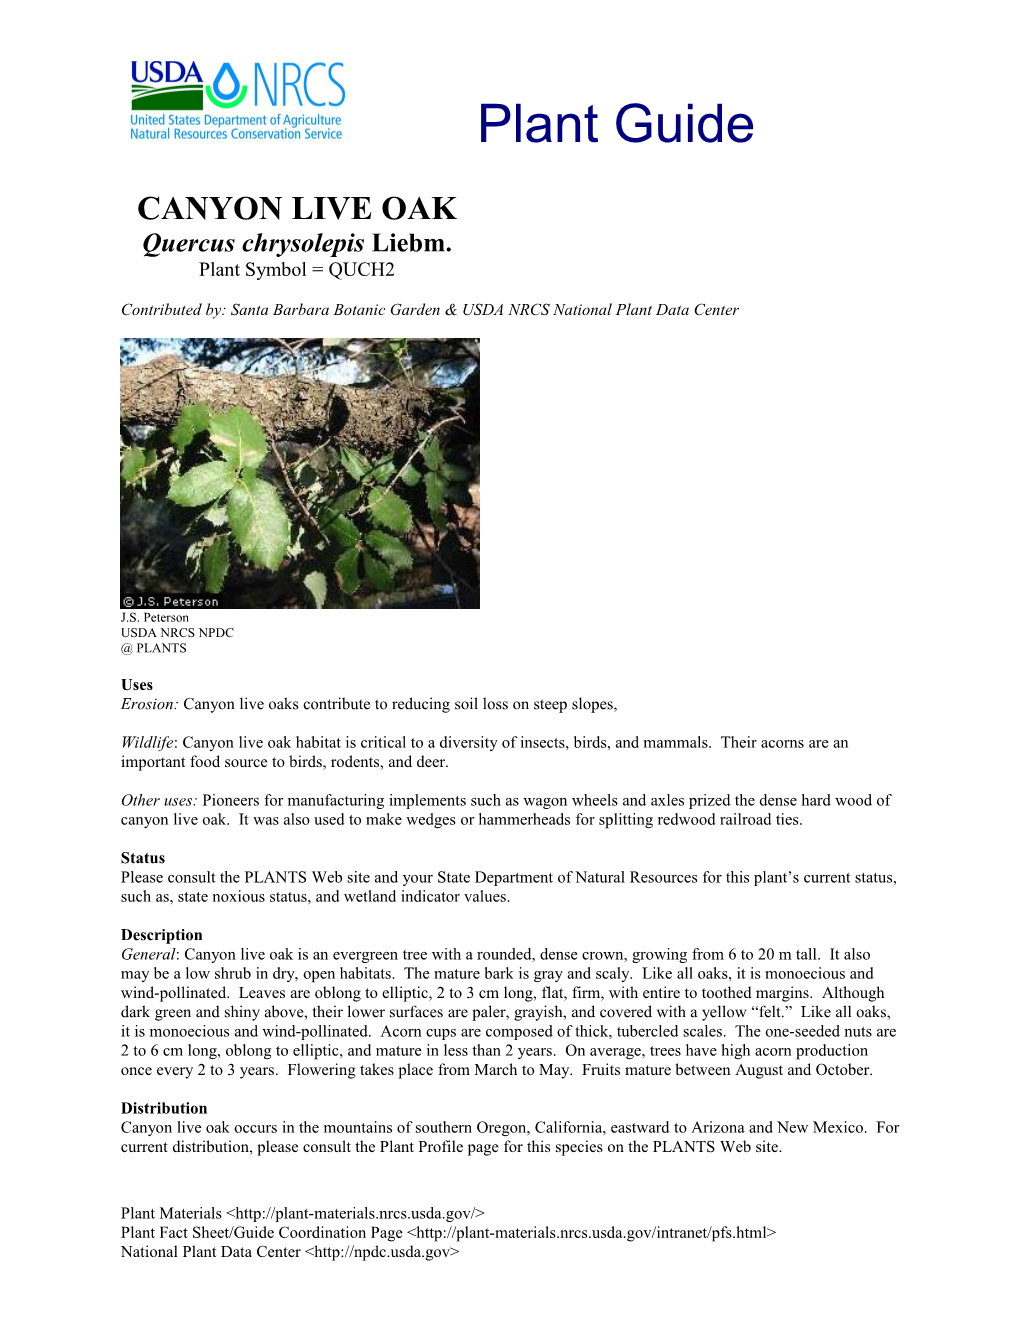 Canyon Live Oak